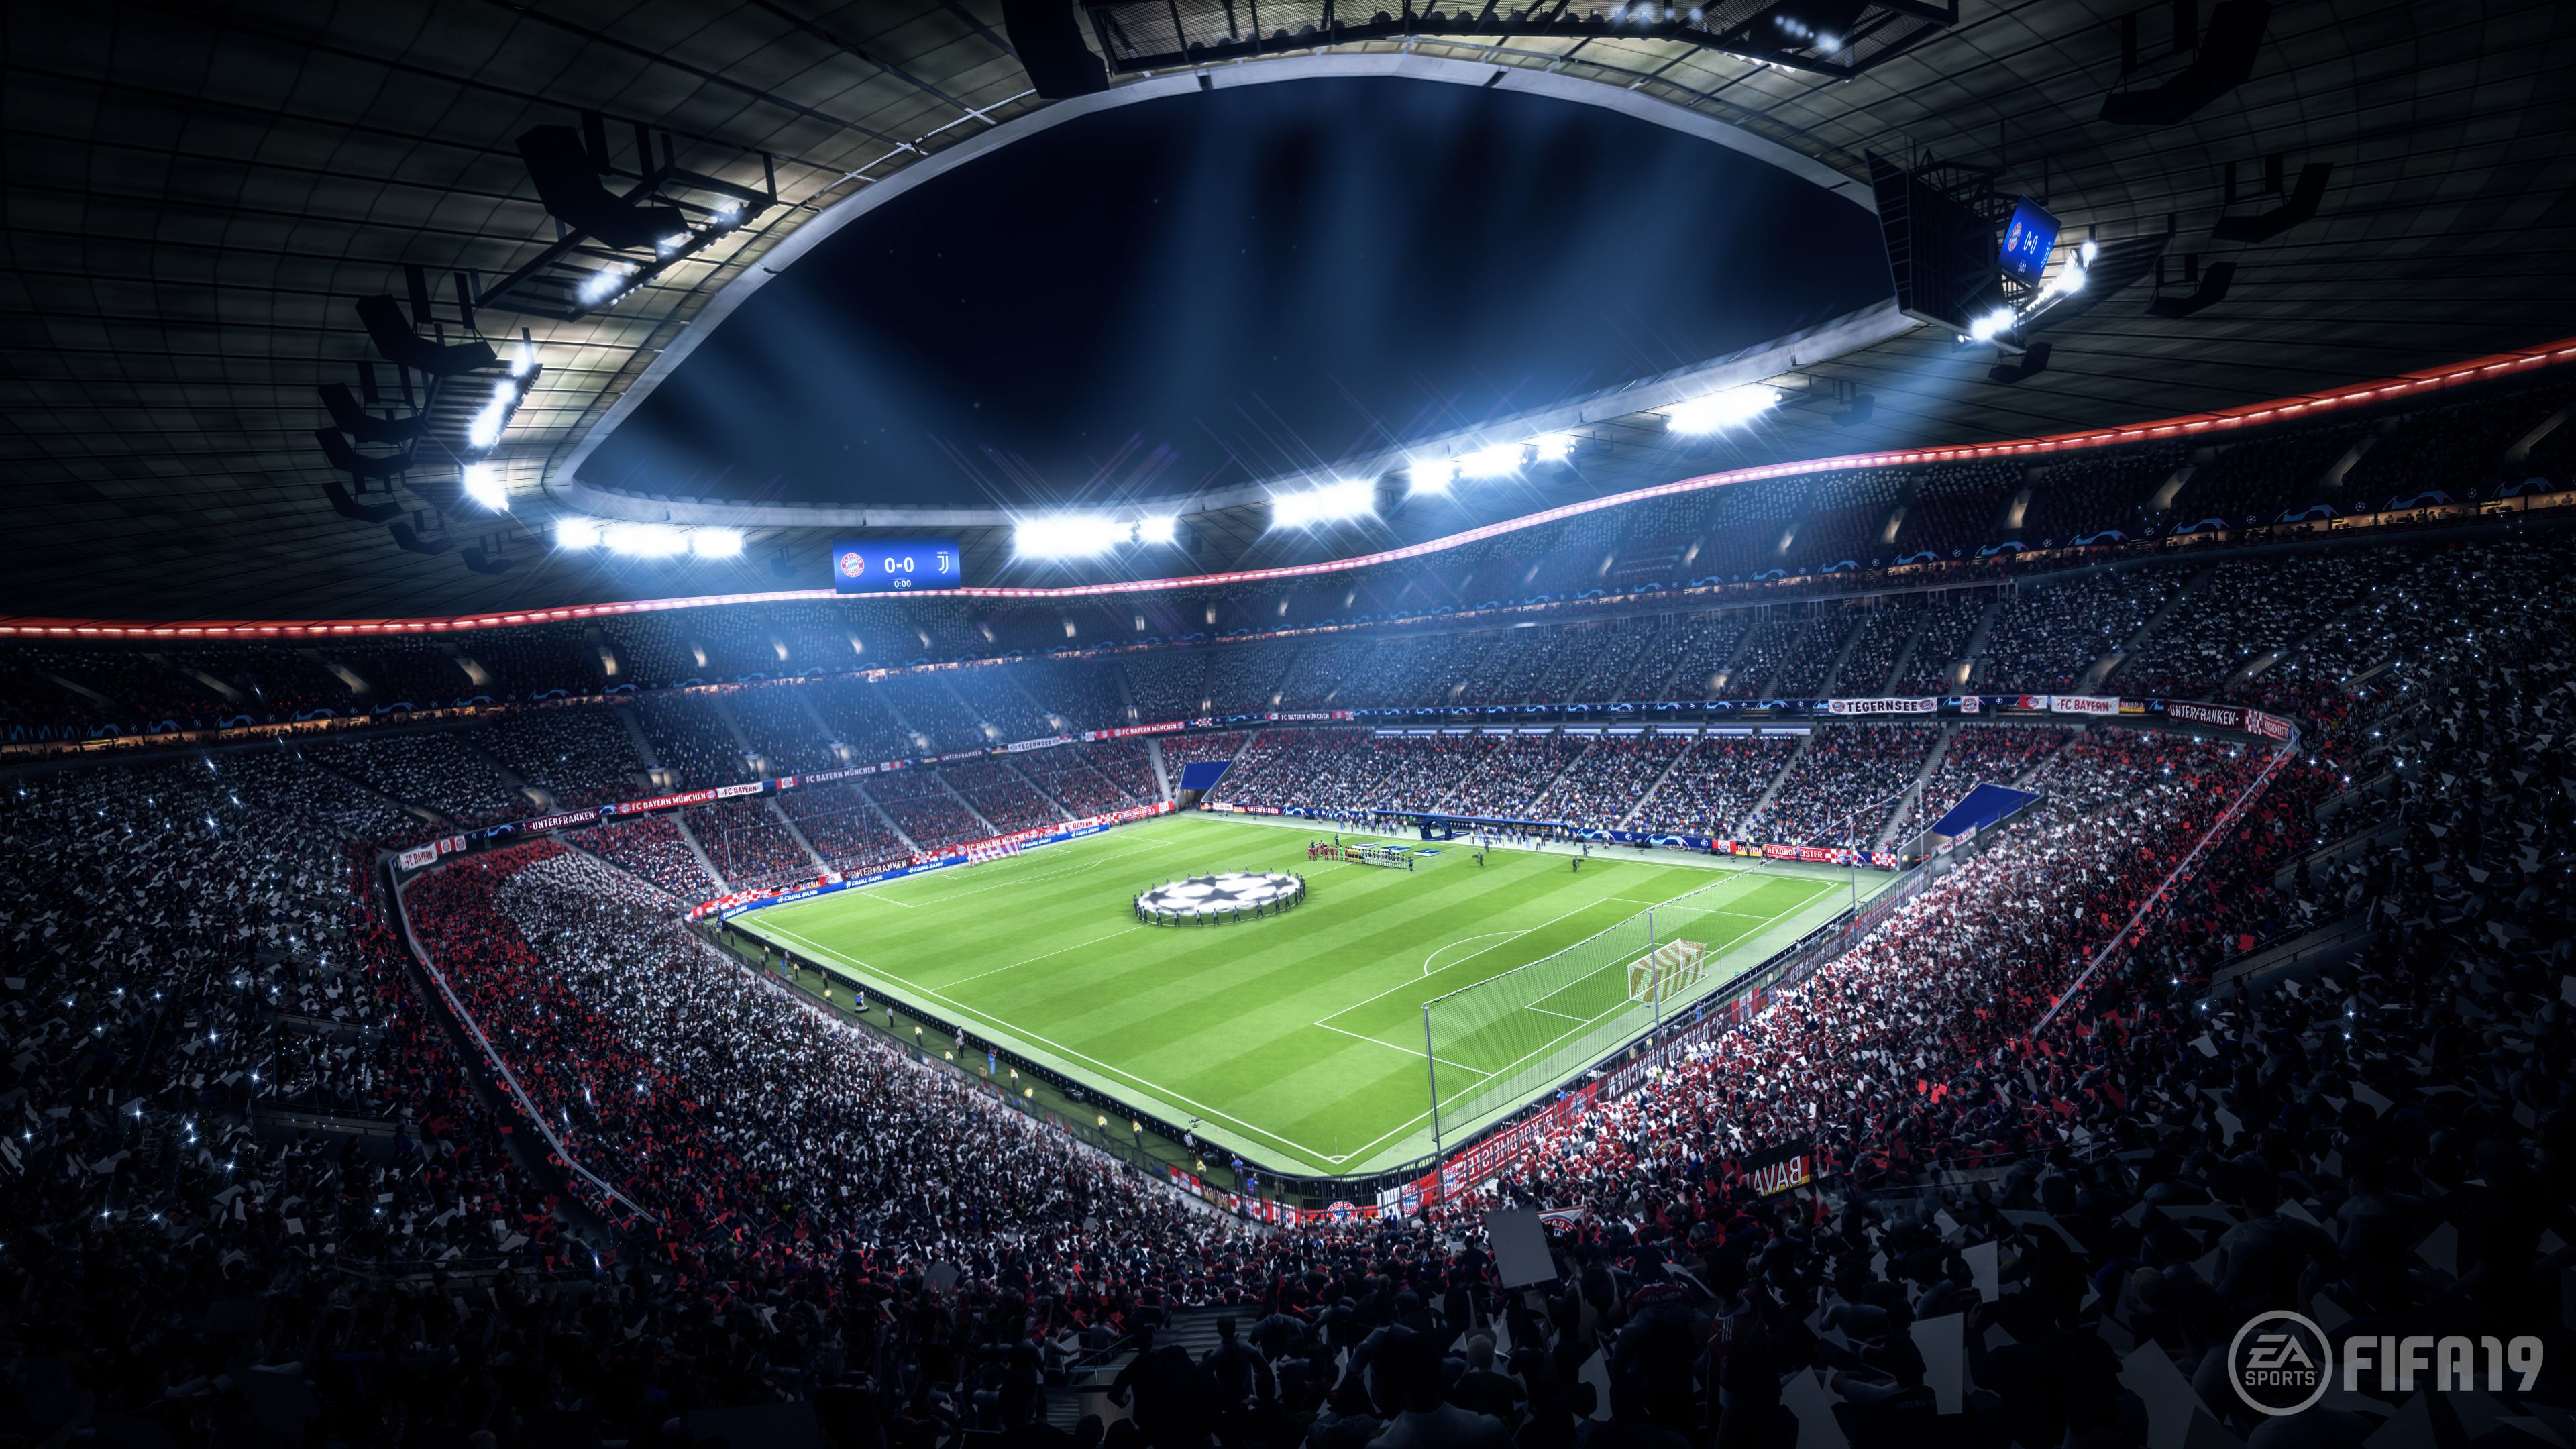 Fifa 19 Stadium 4k, HD Games, 4k Wallpaper, Image, Background